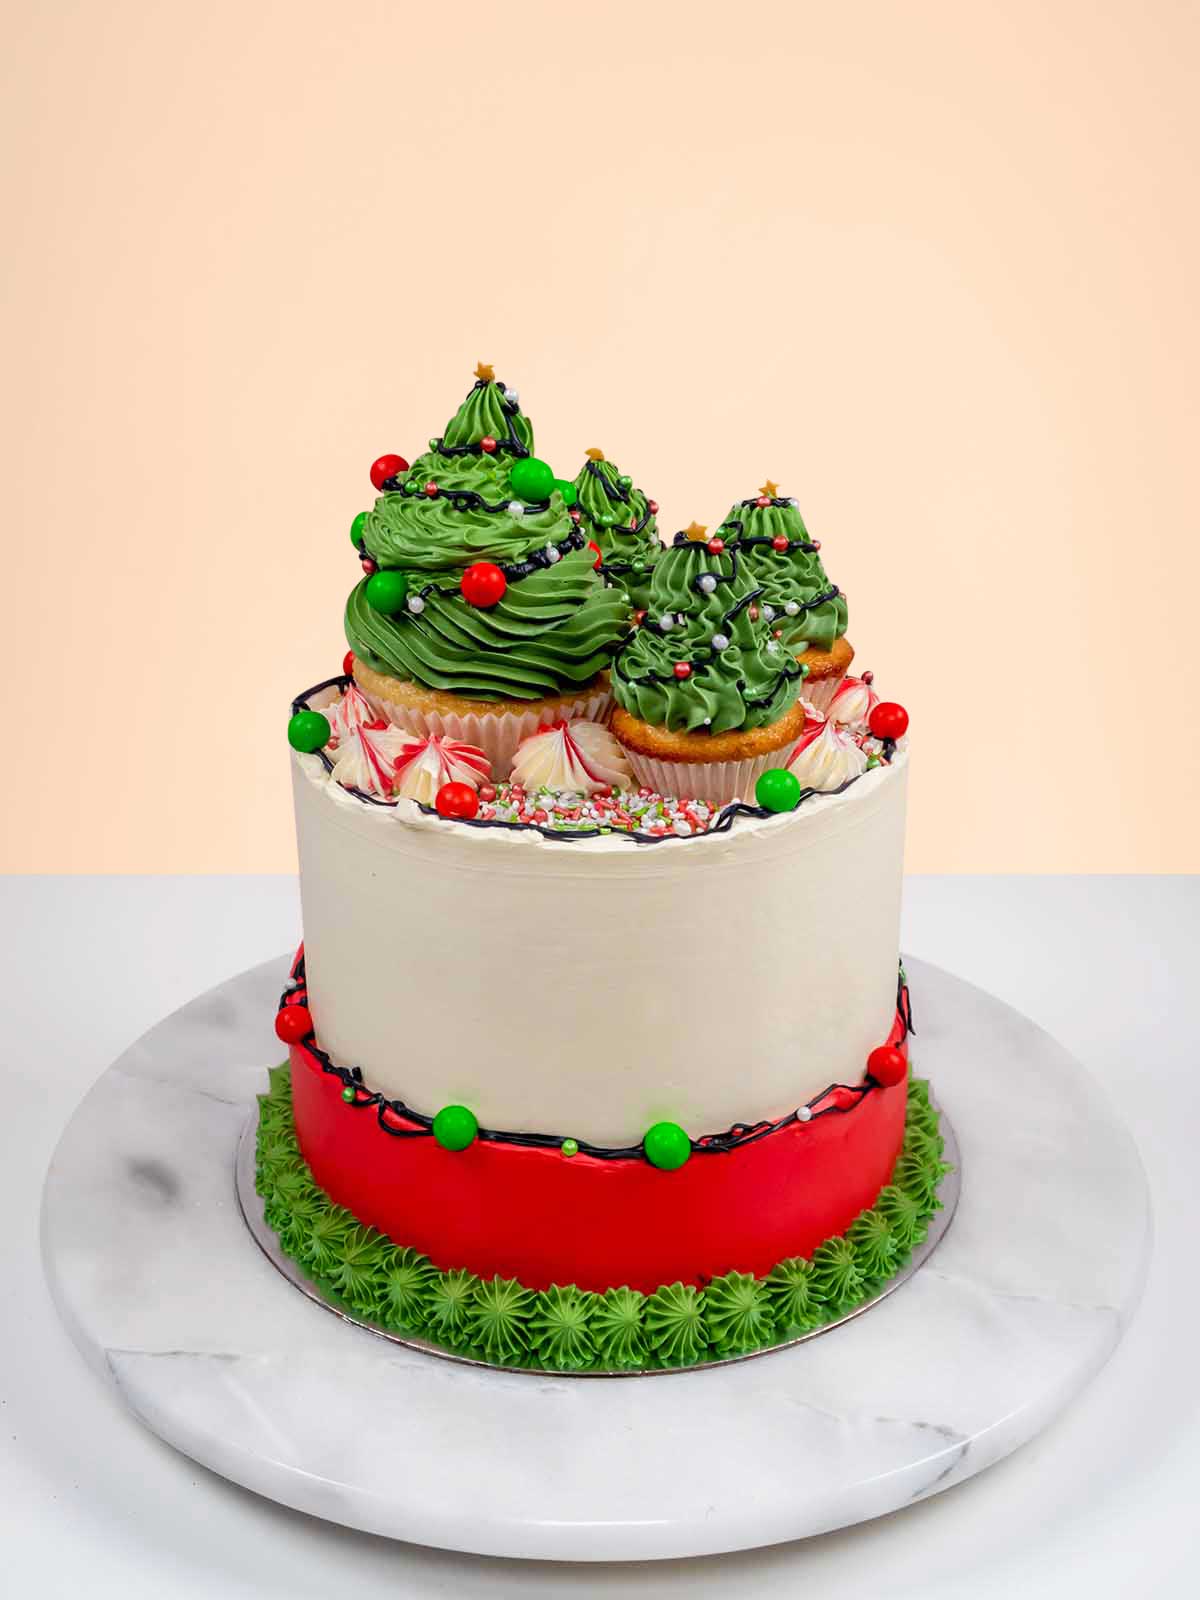 BUCHE Pure Framboise Christmas Log 25cm - Buy Any Cake Online